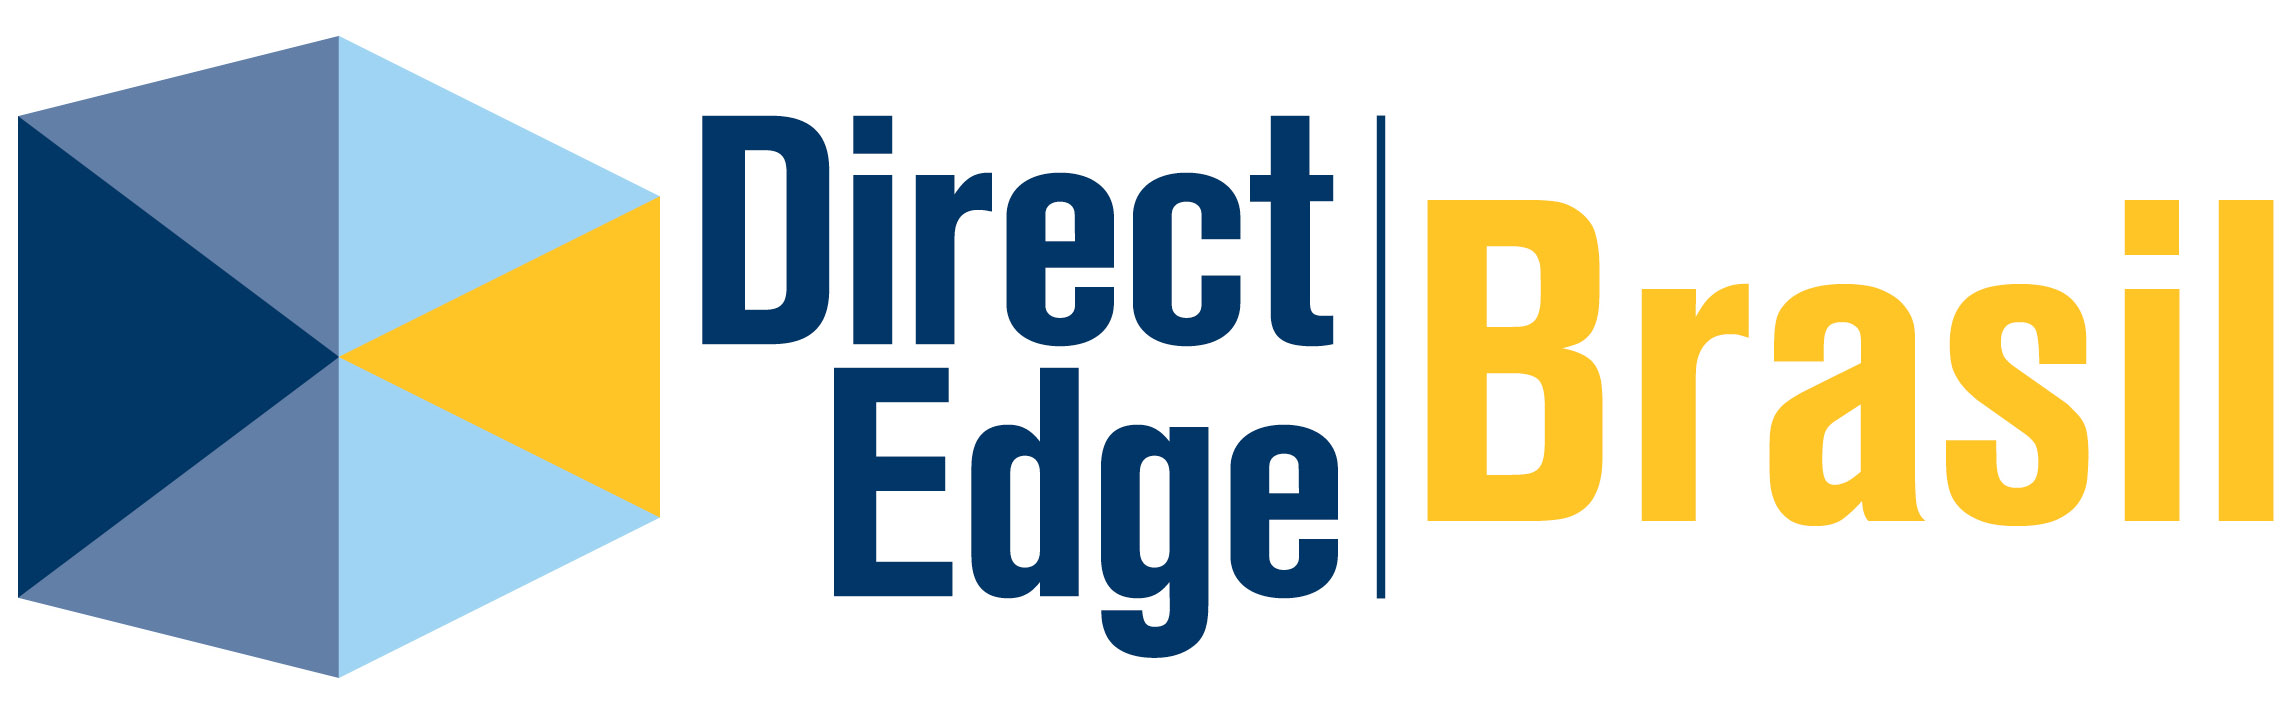 Direct Edge - Brasil Logo